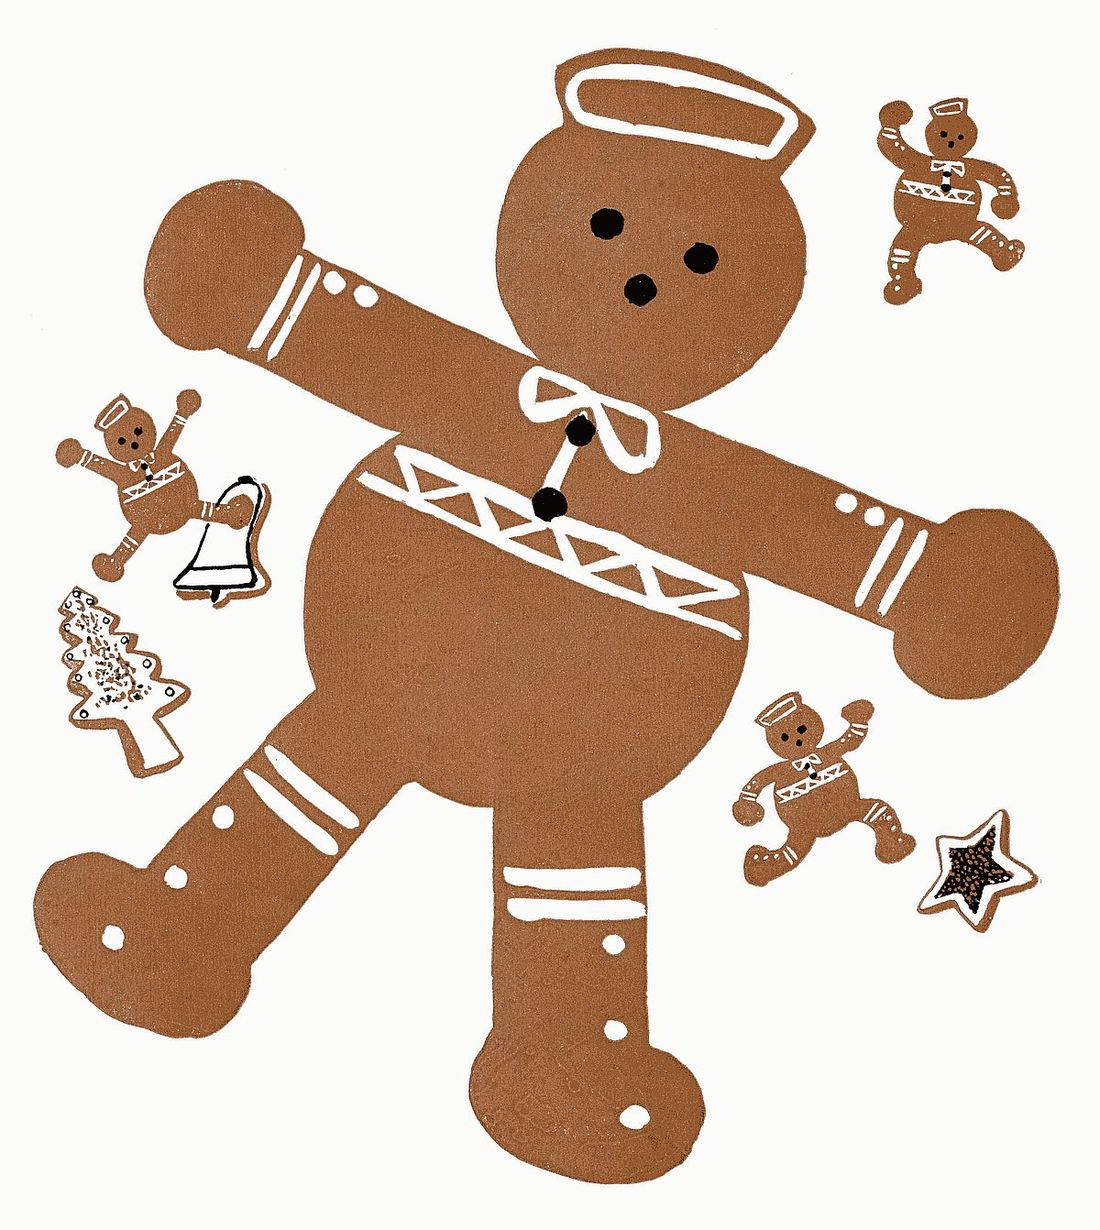 (Gingerbread man shape)